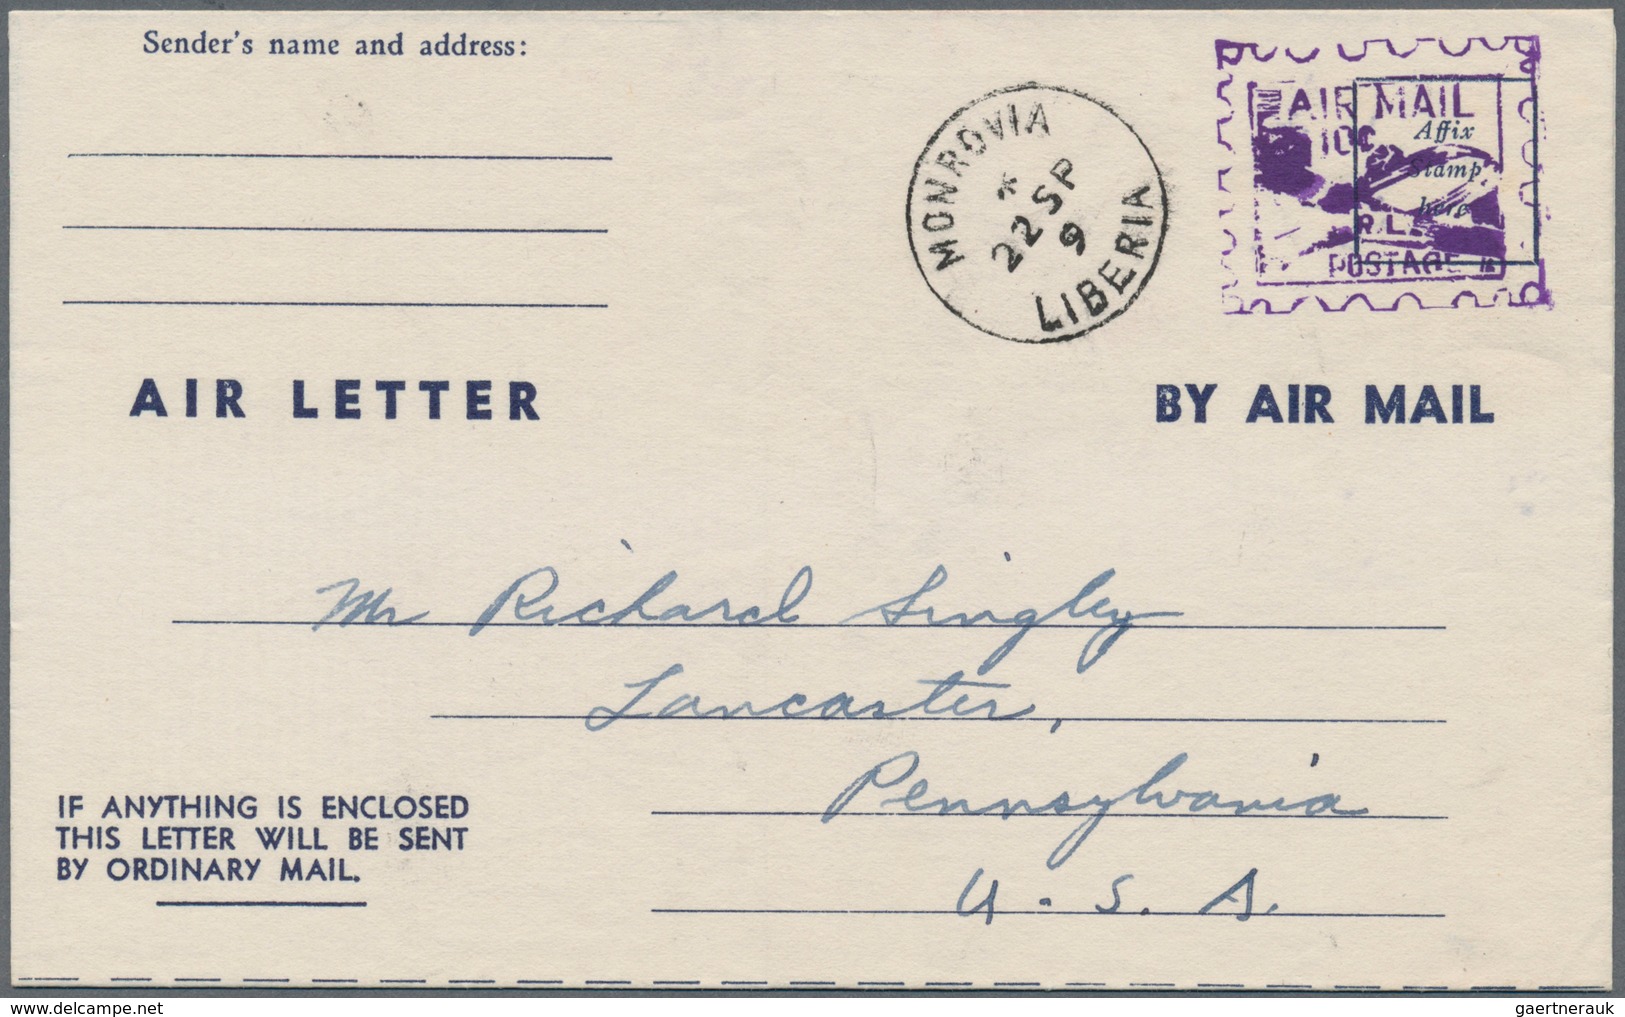 Liberia: 1947, Airletter #1, Used "MONROVIA 22 SP 9" To Lancaster/PA, USA. - Liberia